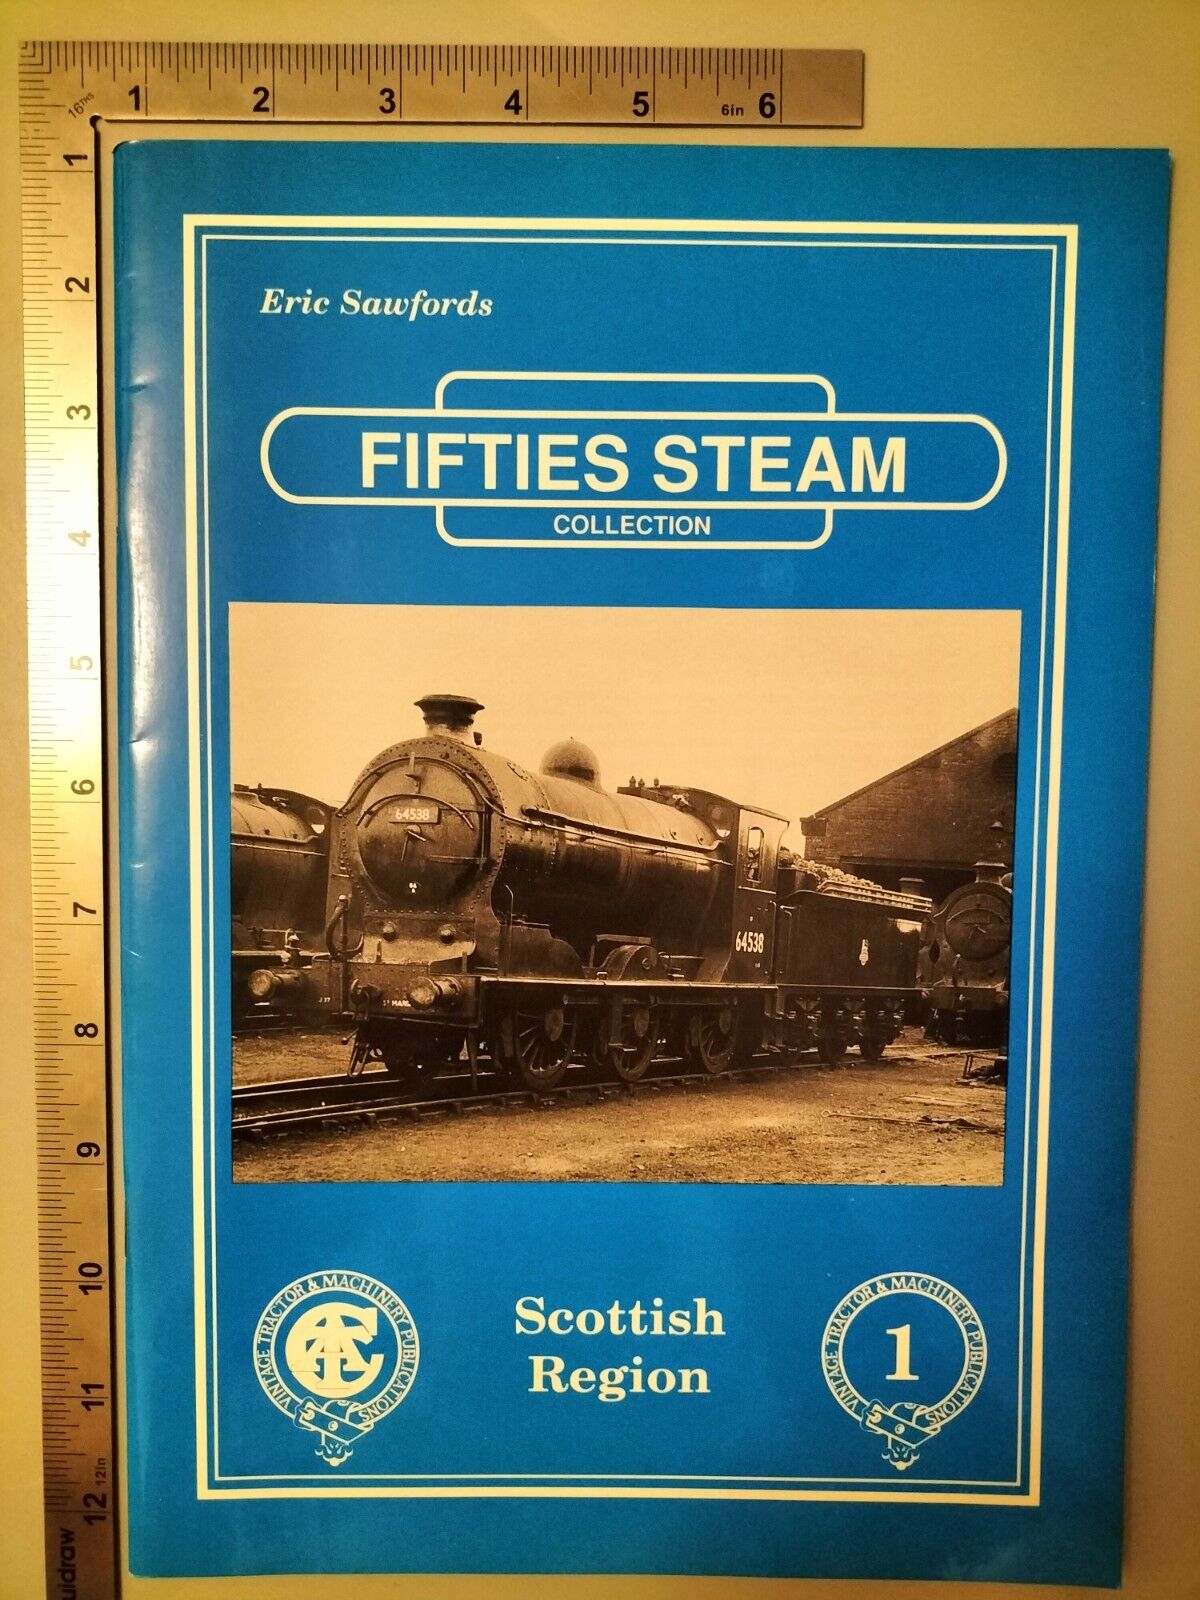 Fifties Steam Collection Eric Sawfords Scottish Region 1991 PB Allan T. Condie